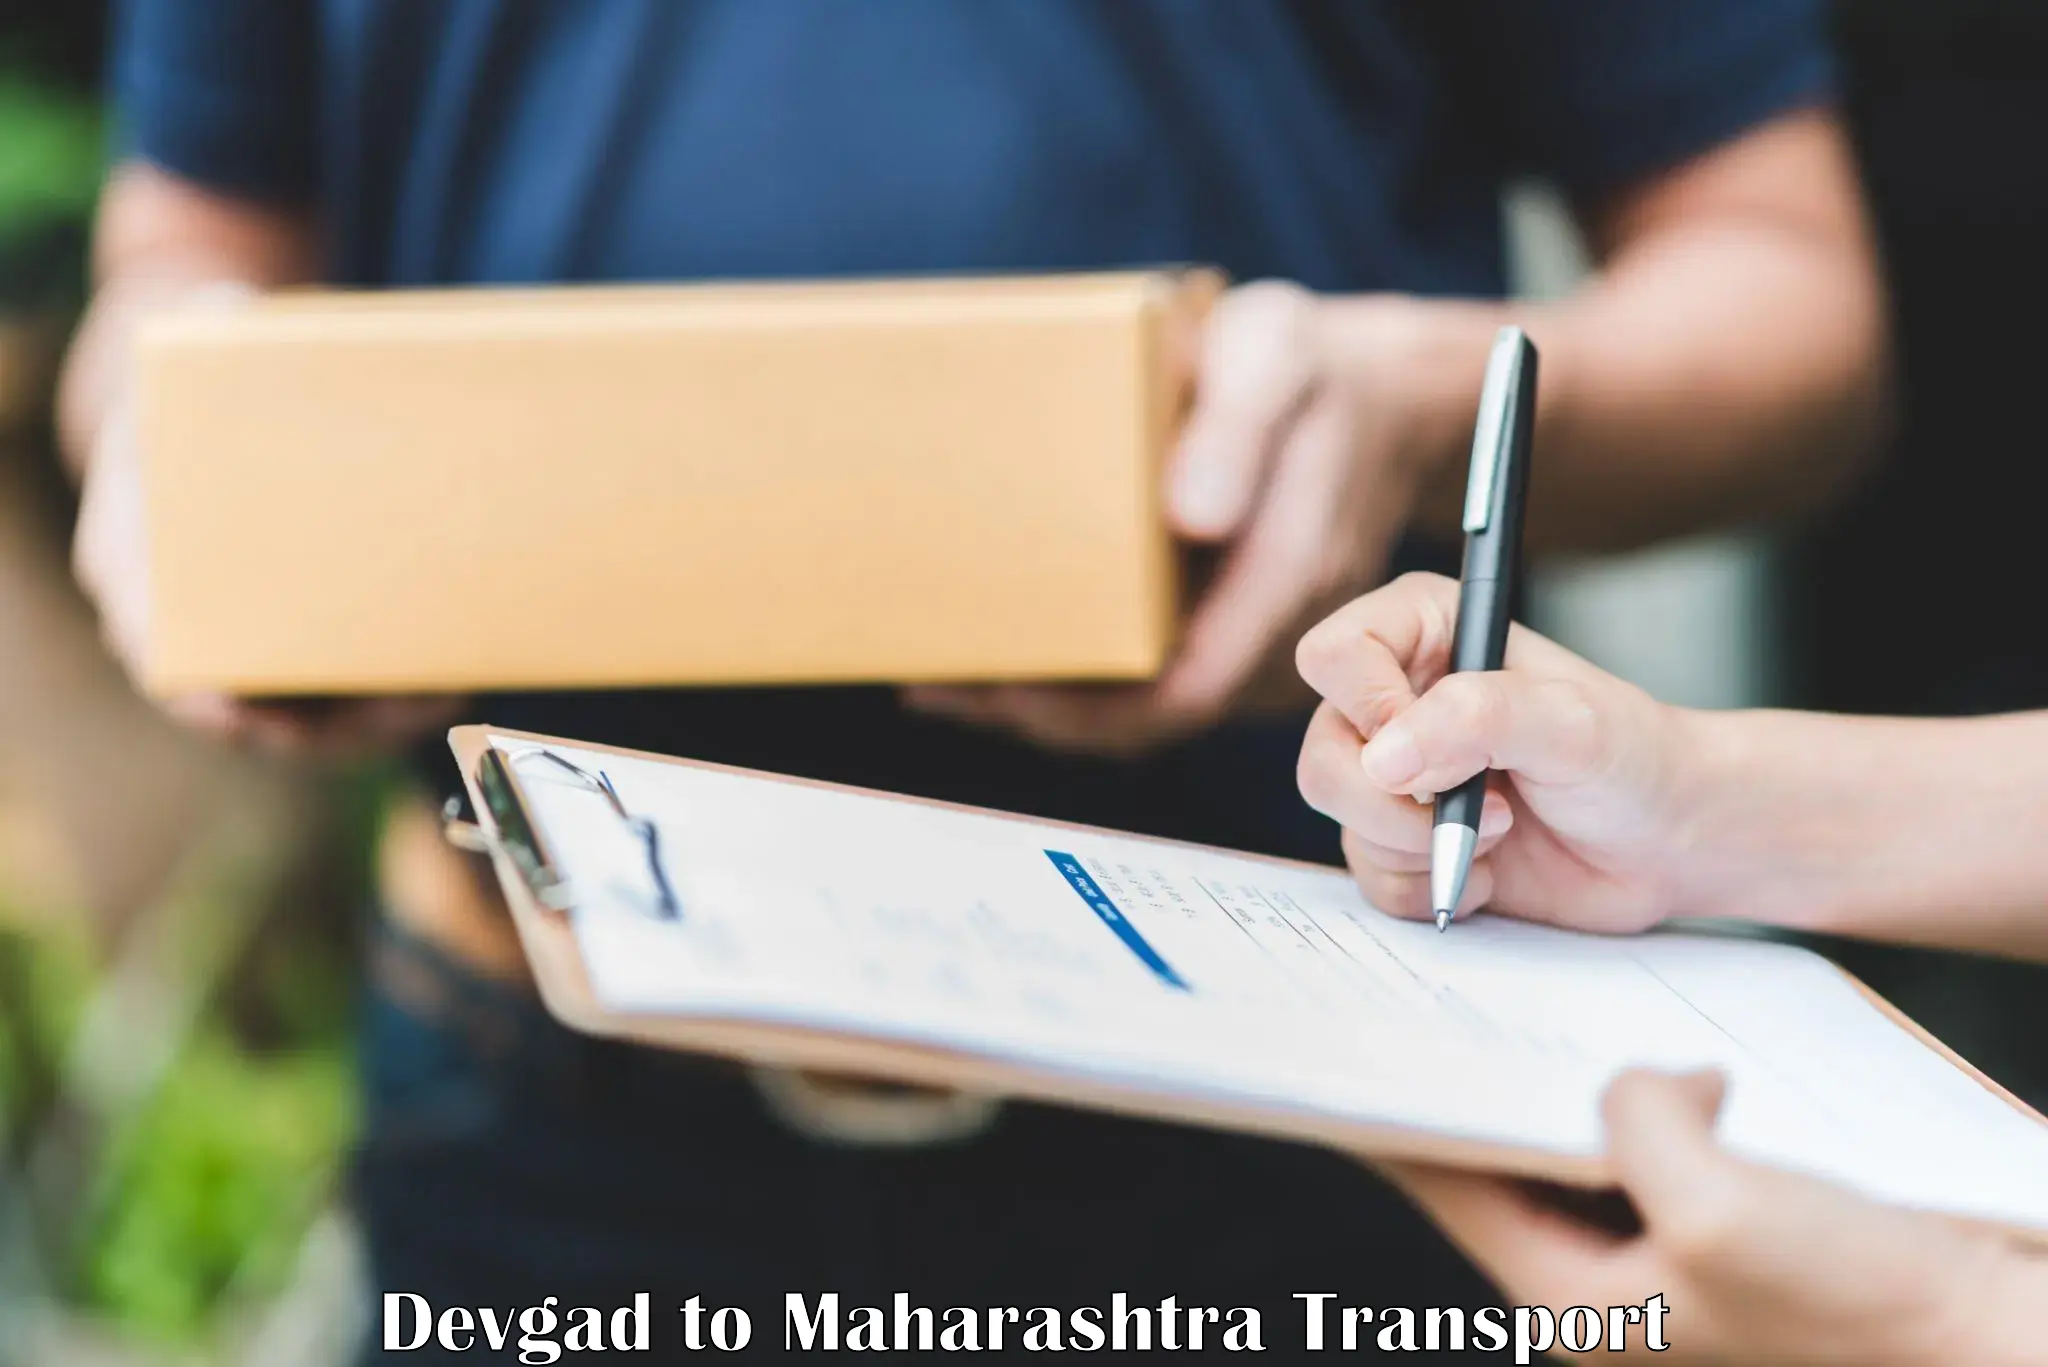 Shipping partner Devgad to Maharashtra